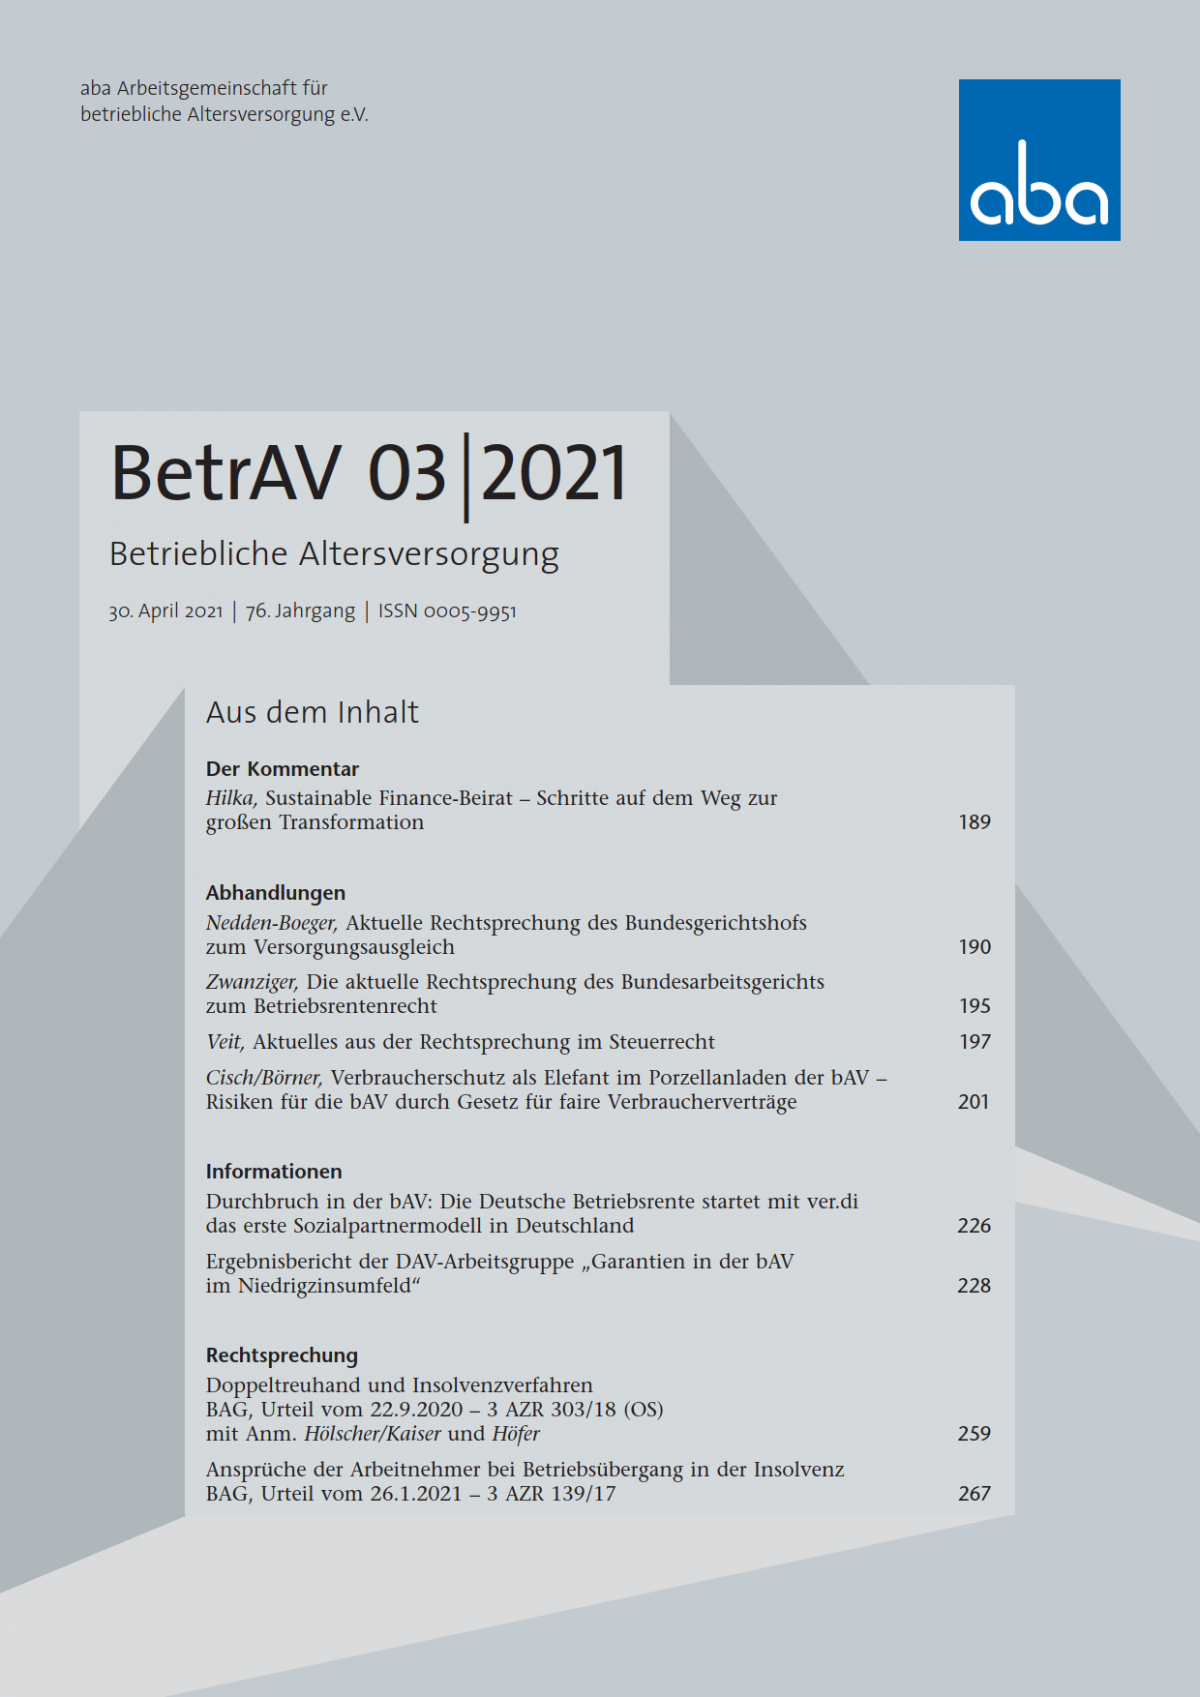 BetrAV-Ausgabe 3/2021 erschienen